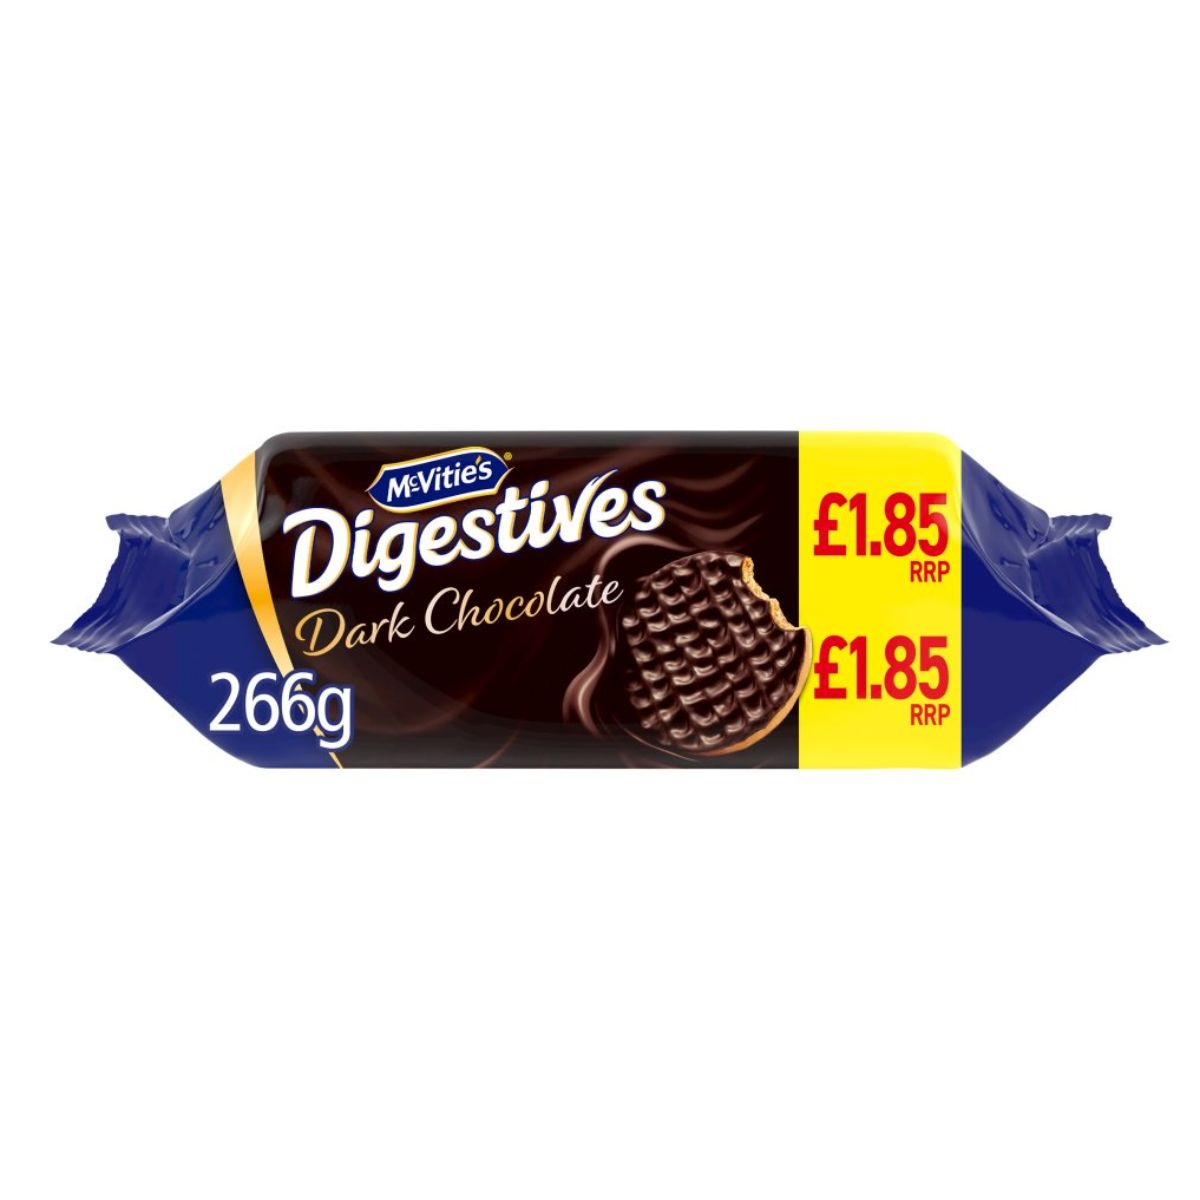 McVities - Digestives Dark Chocolate Biscuits - 266g.